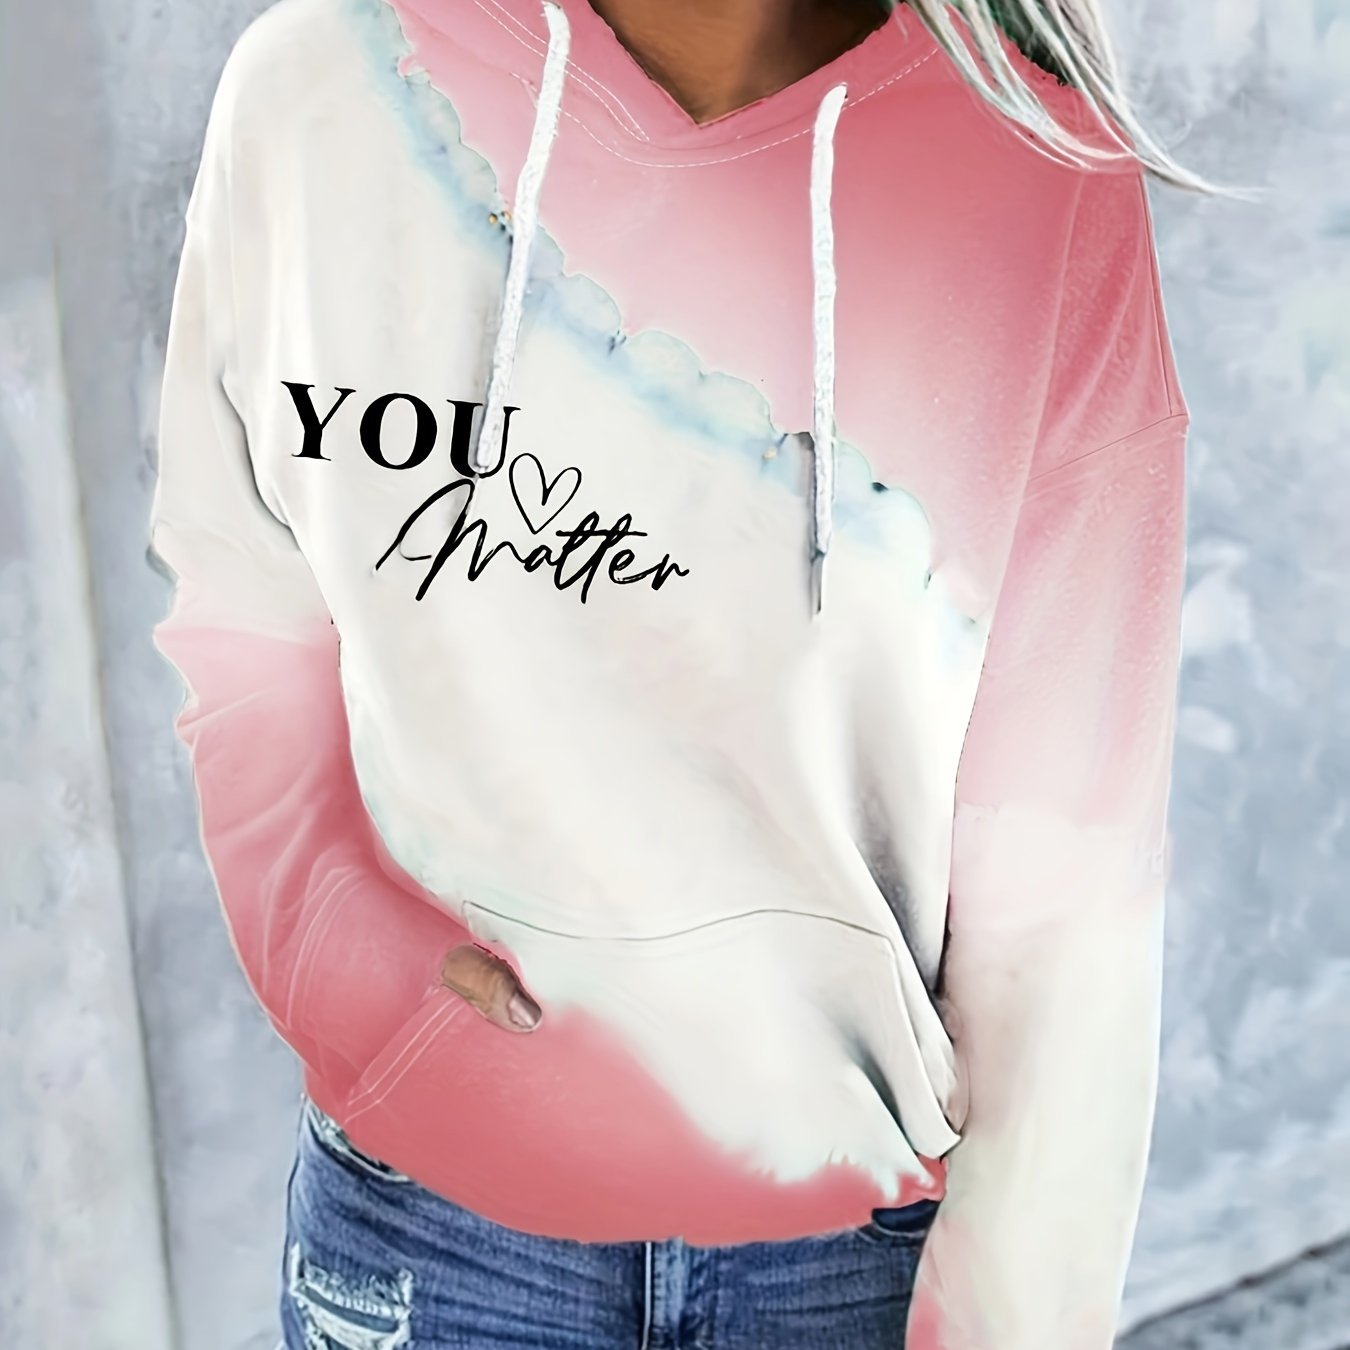 You Matter Plus Size Women's Christian Pullover Hooded Sweatshirt claimedbygoddesigns